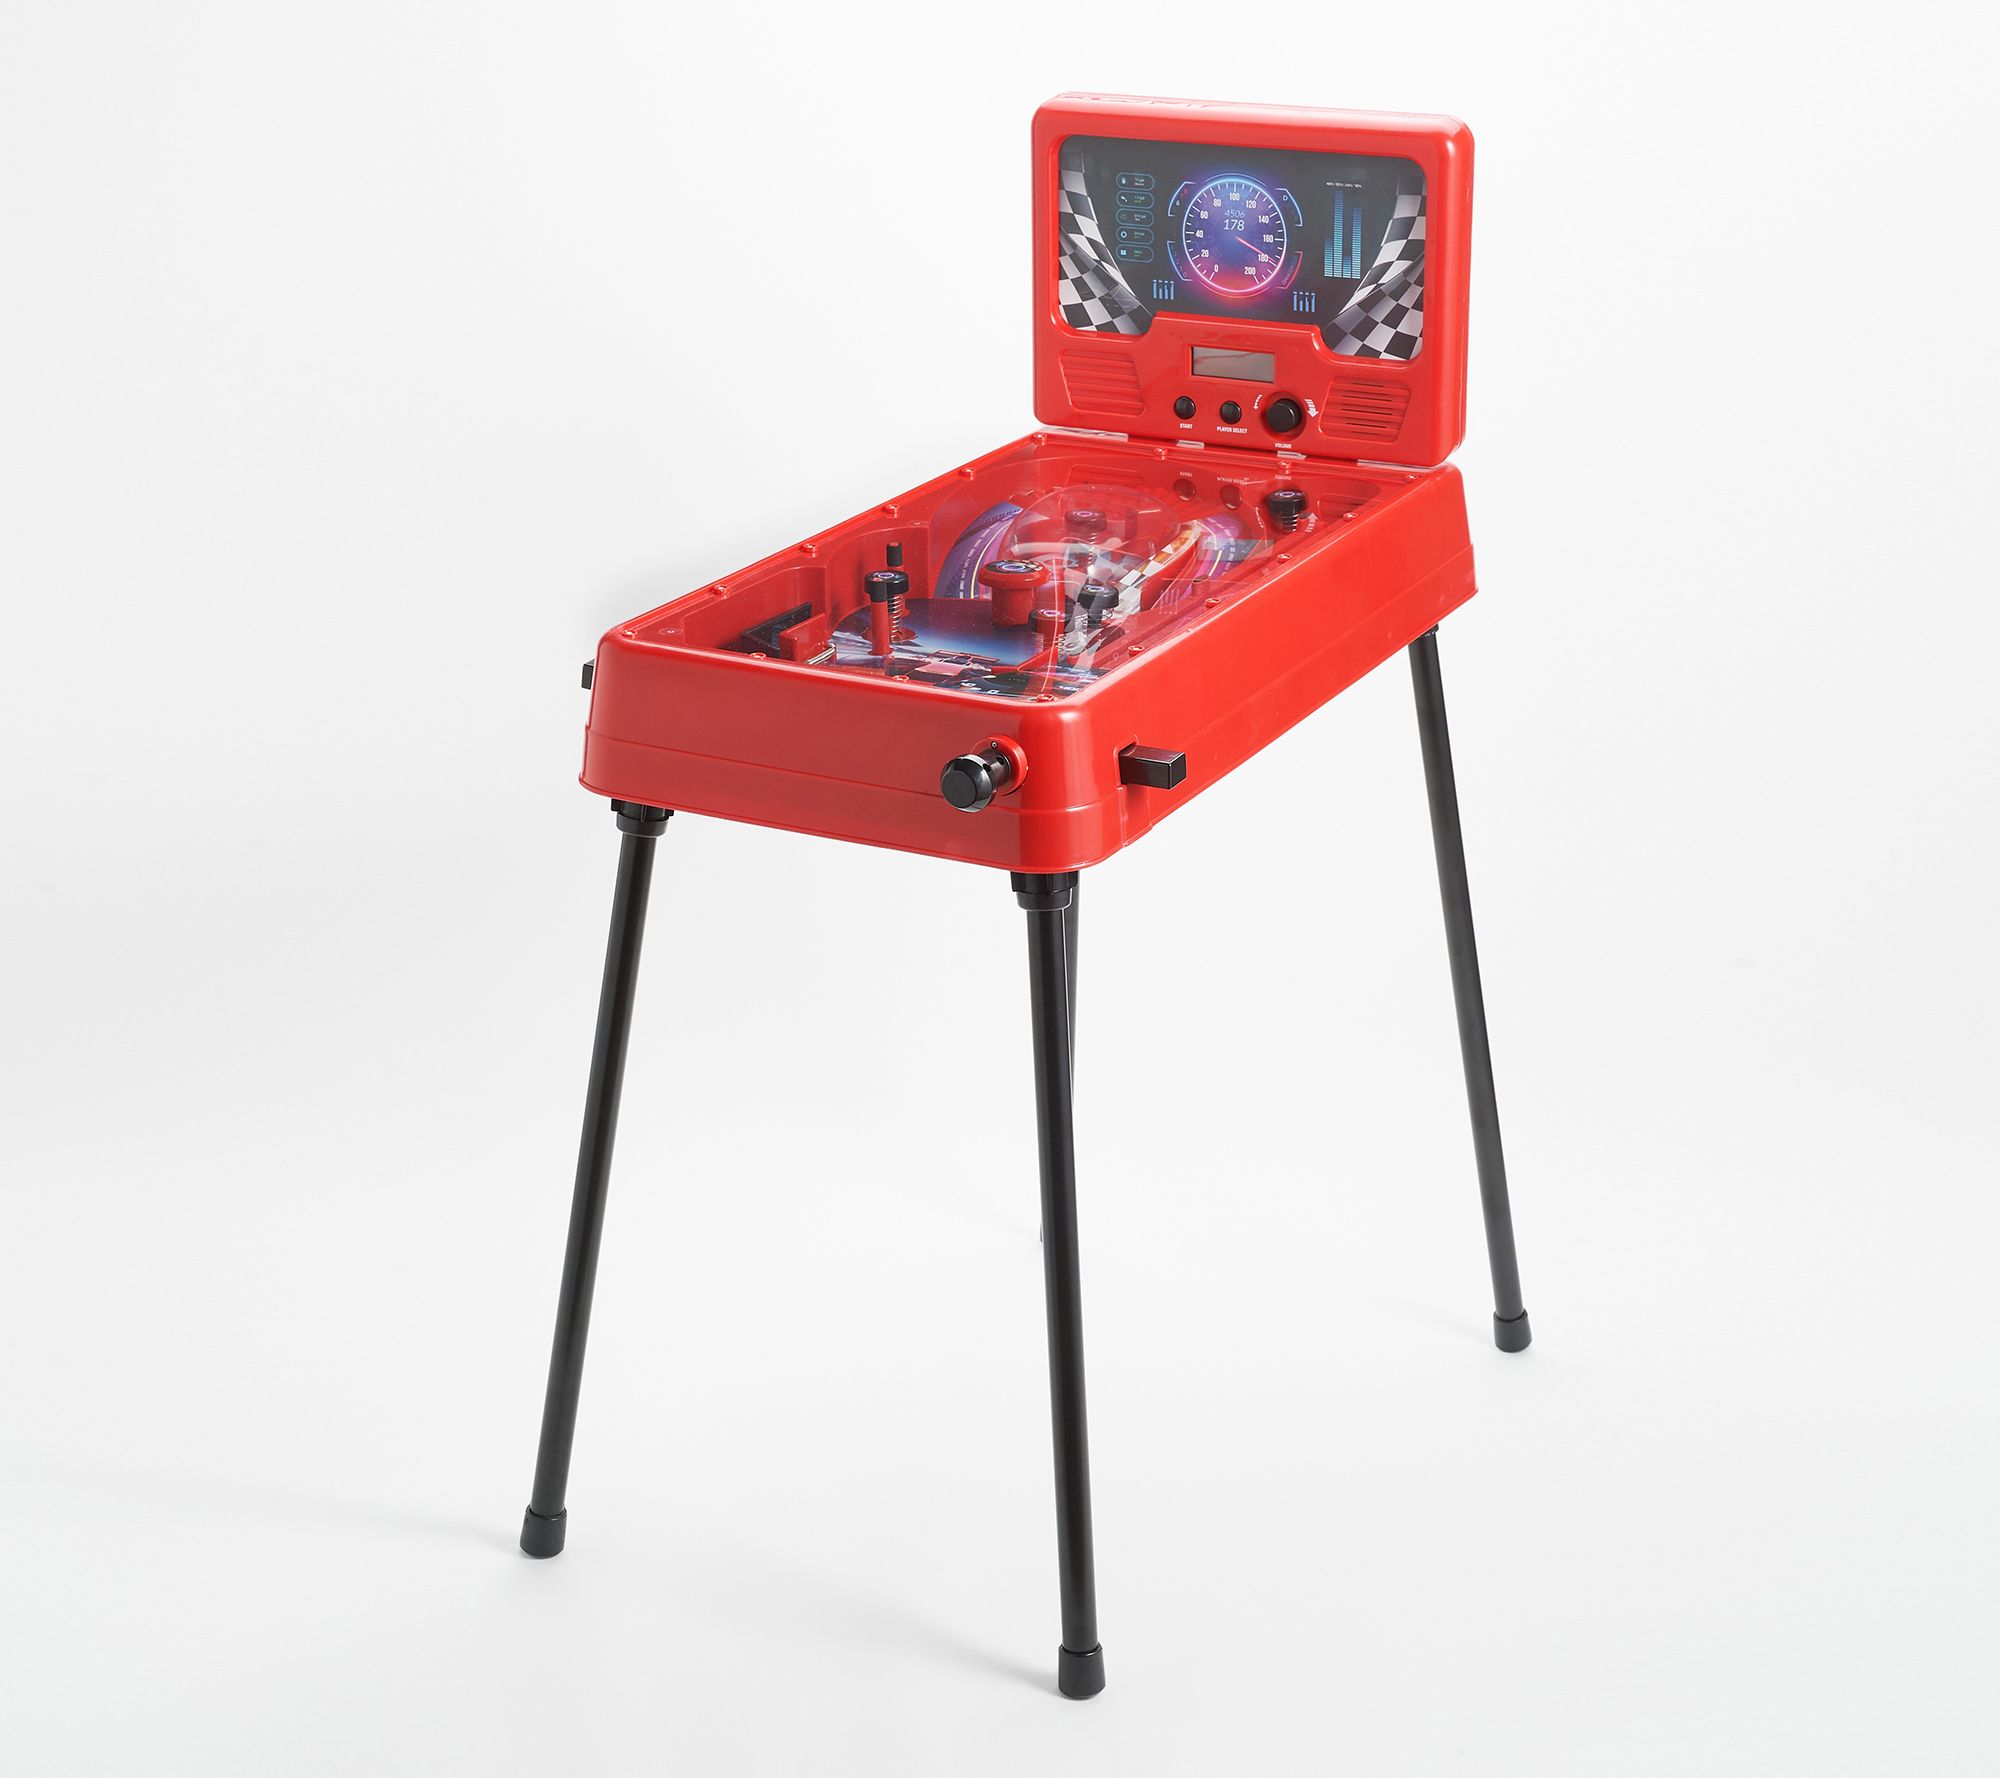 tabletop pinball machine